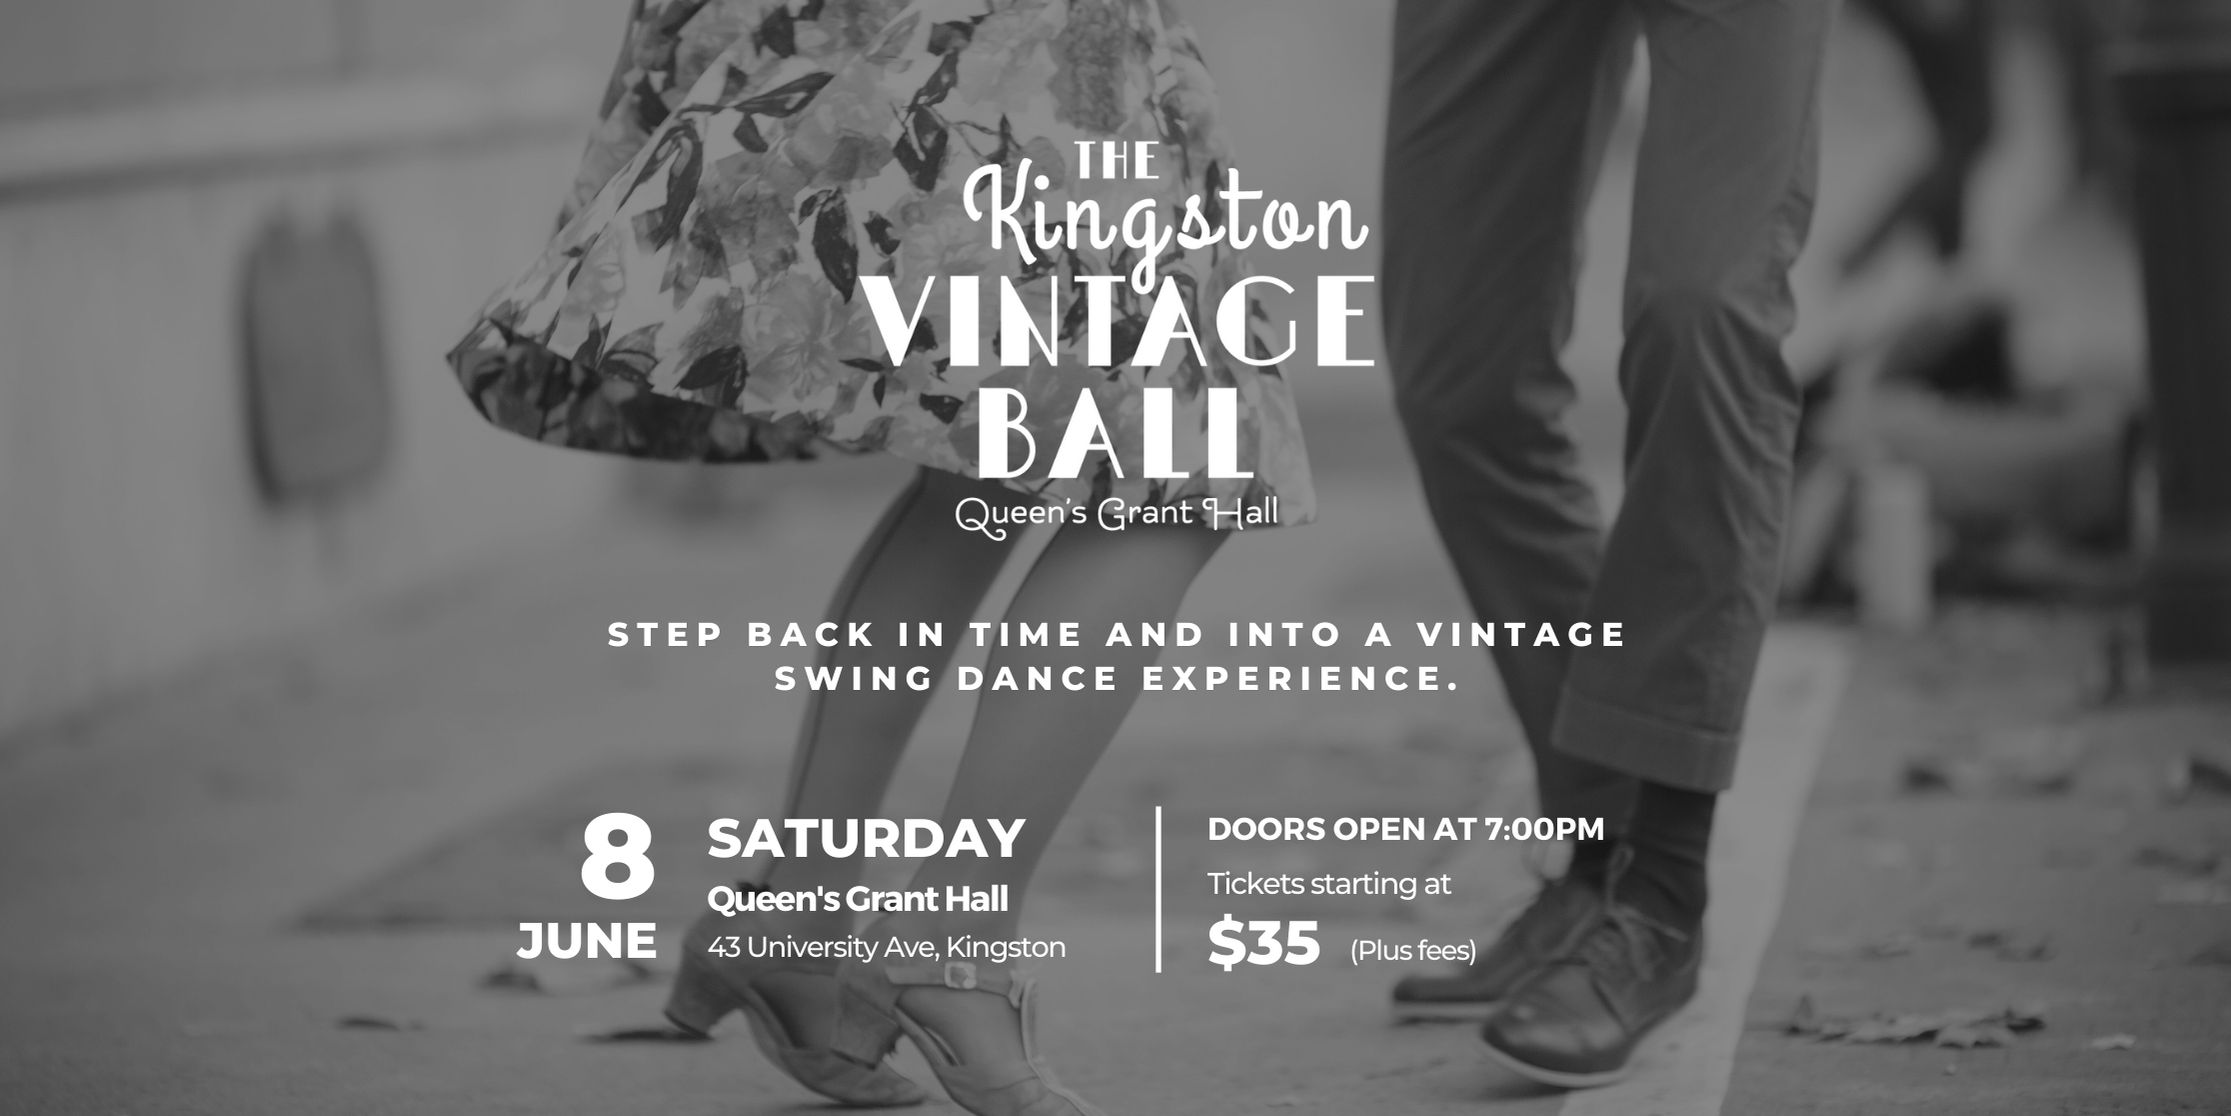 The Kingston Vintage Ball